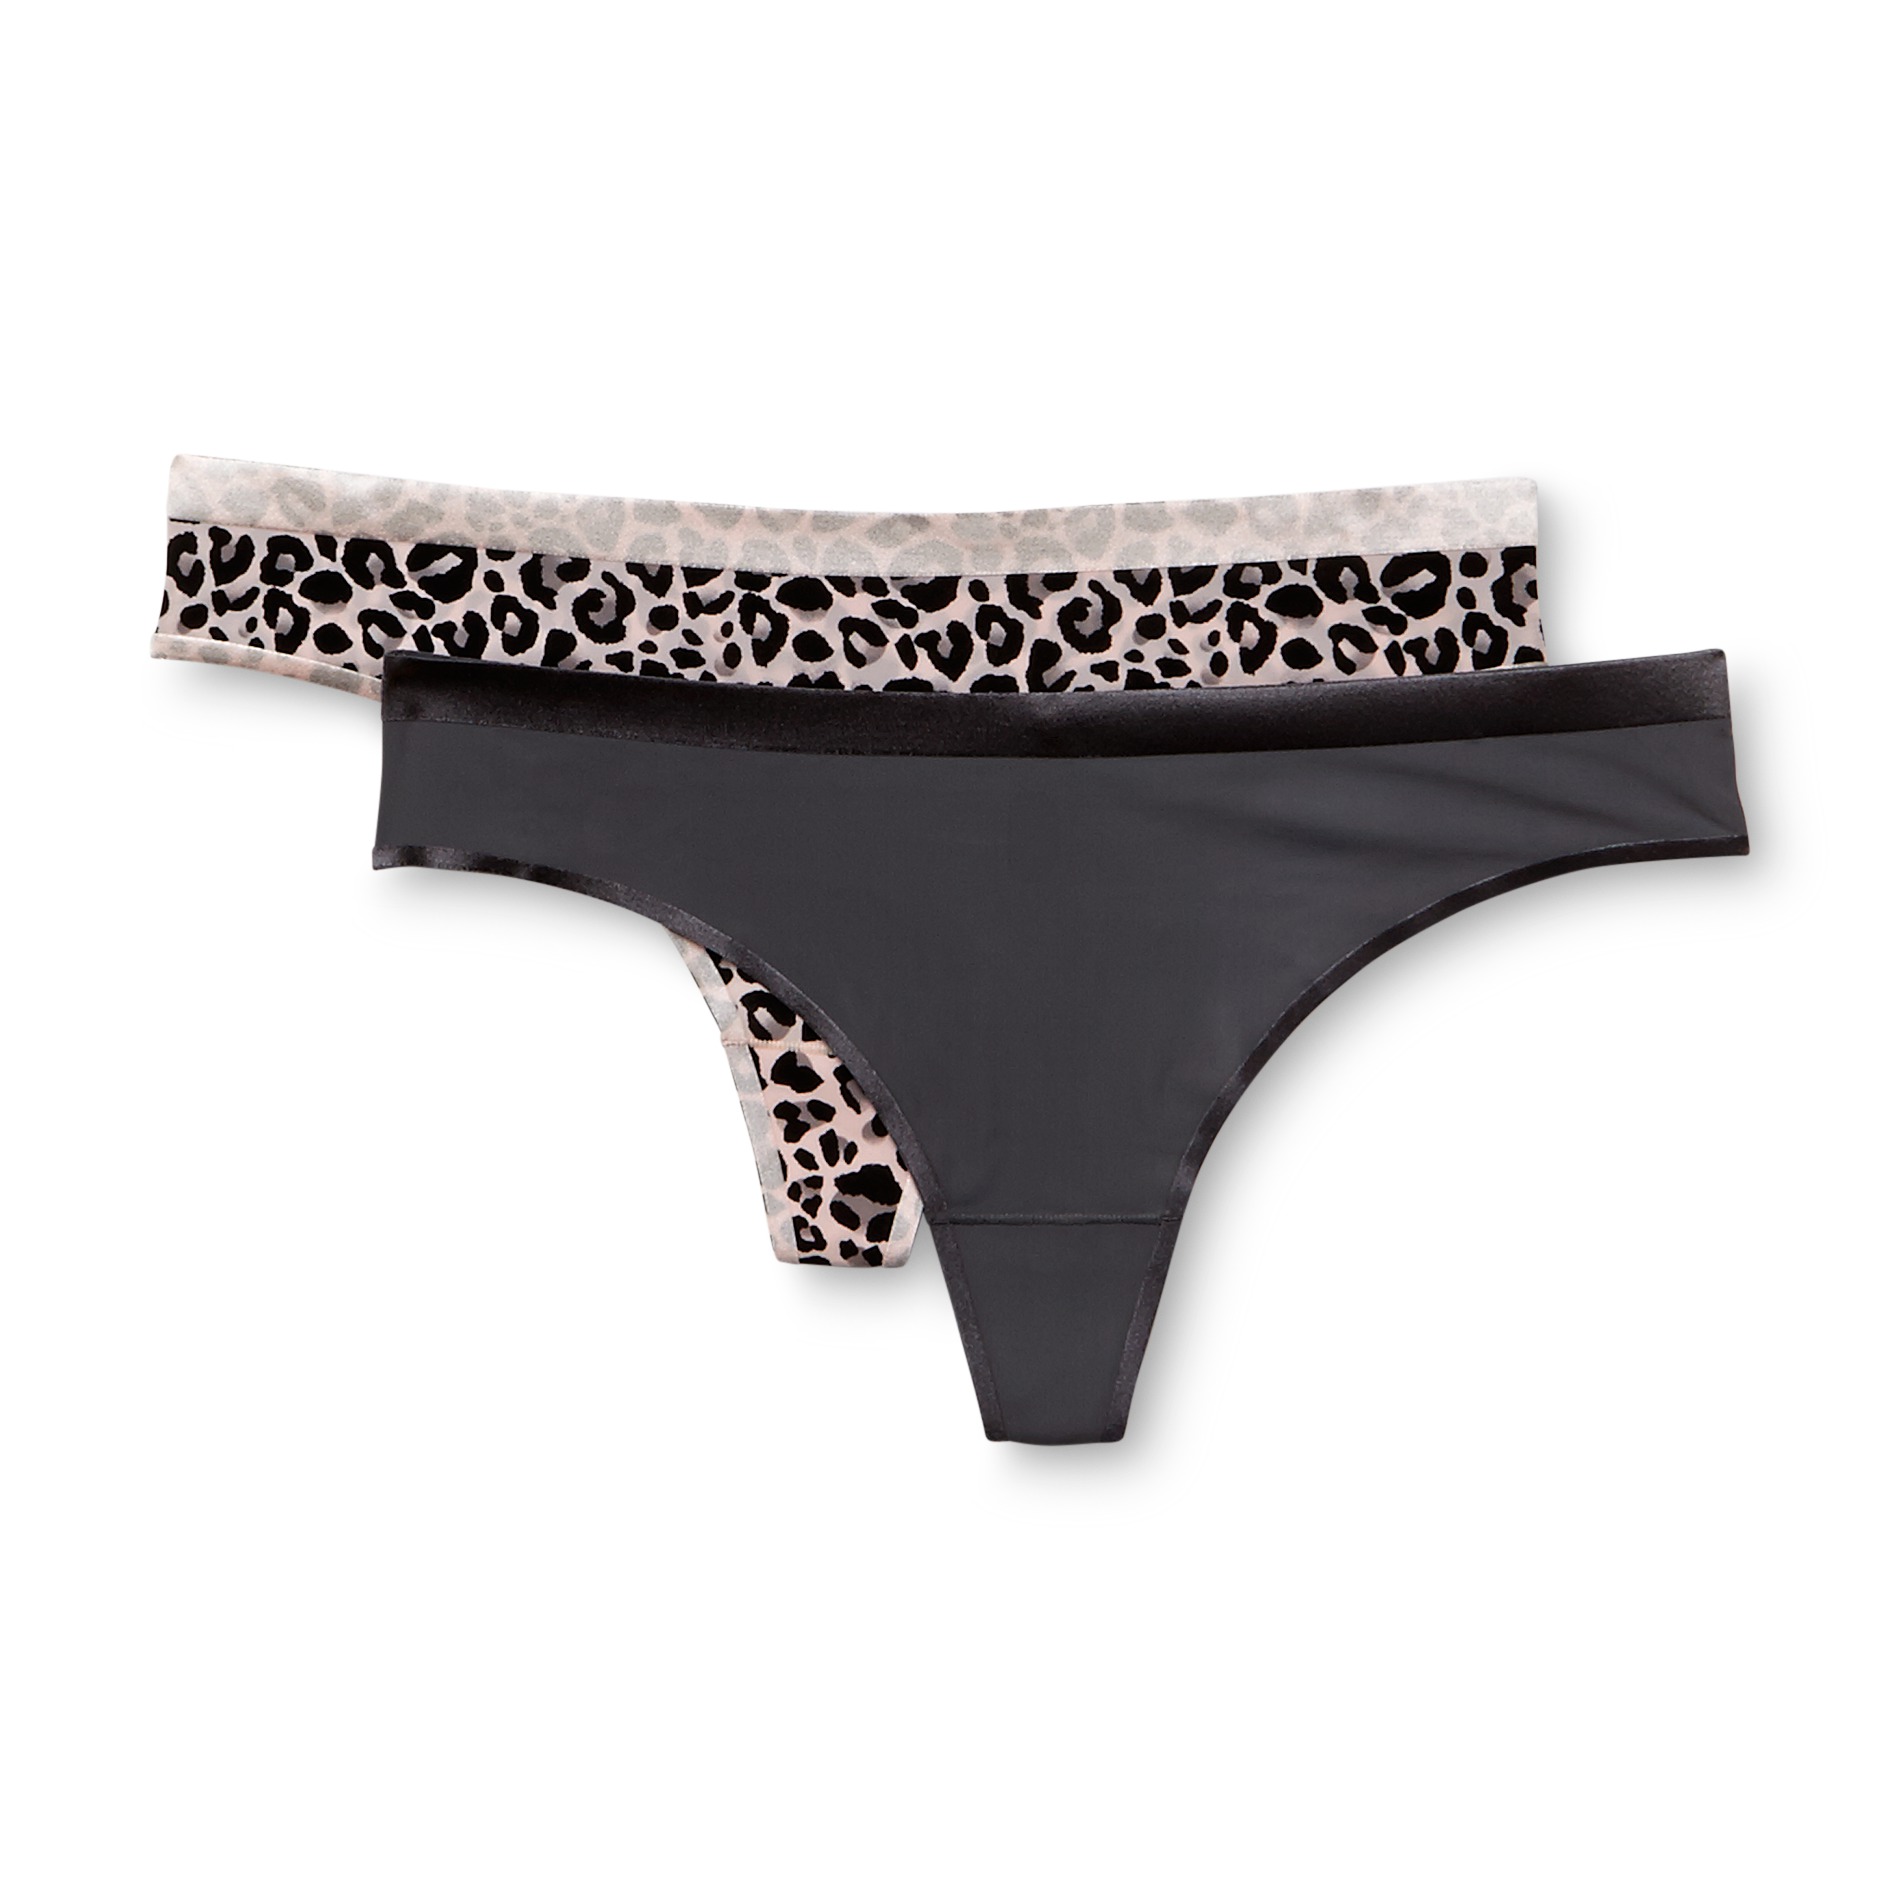 Imagination by Lamour Women's 2-Pack Satin-Trim Thong Panties - Leopard